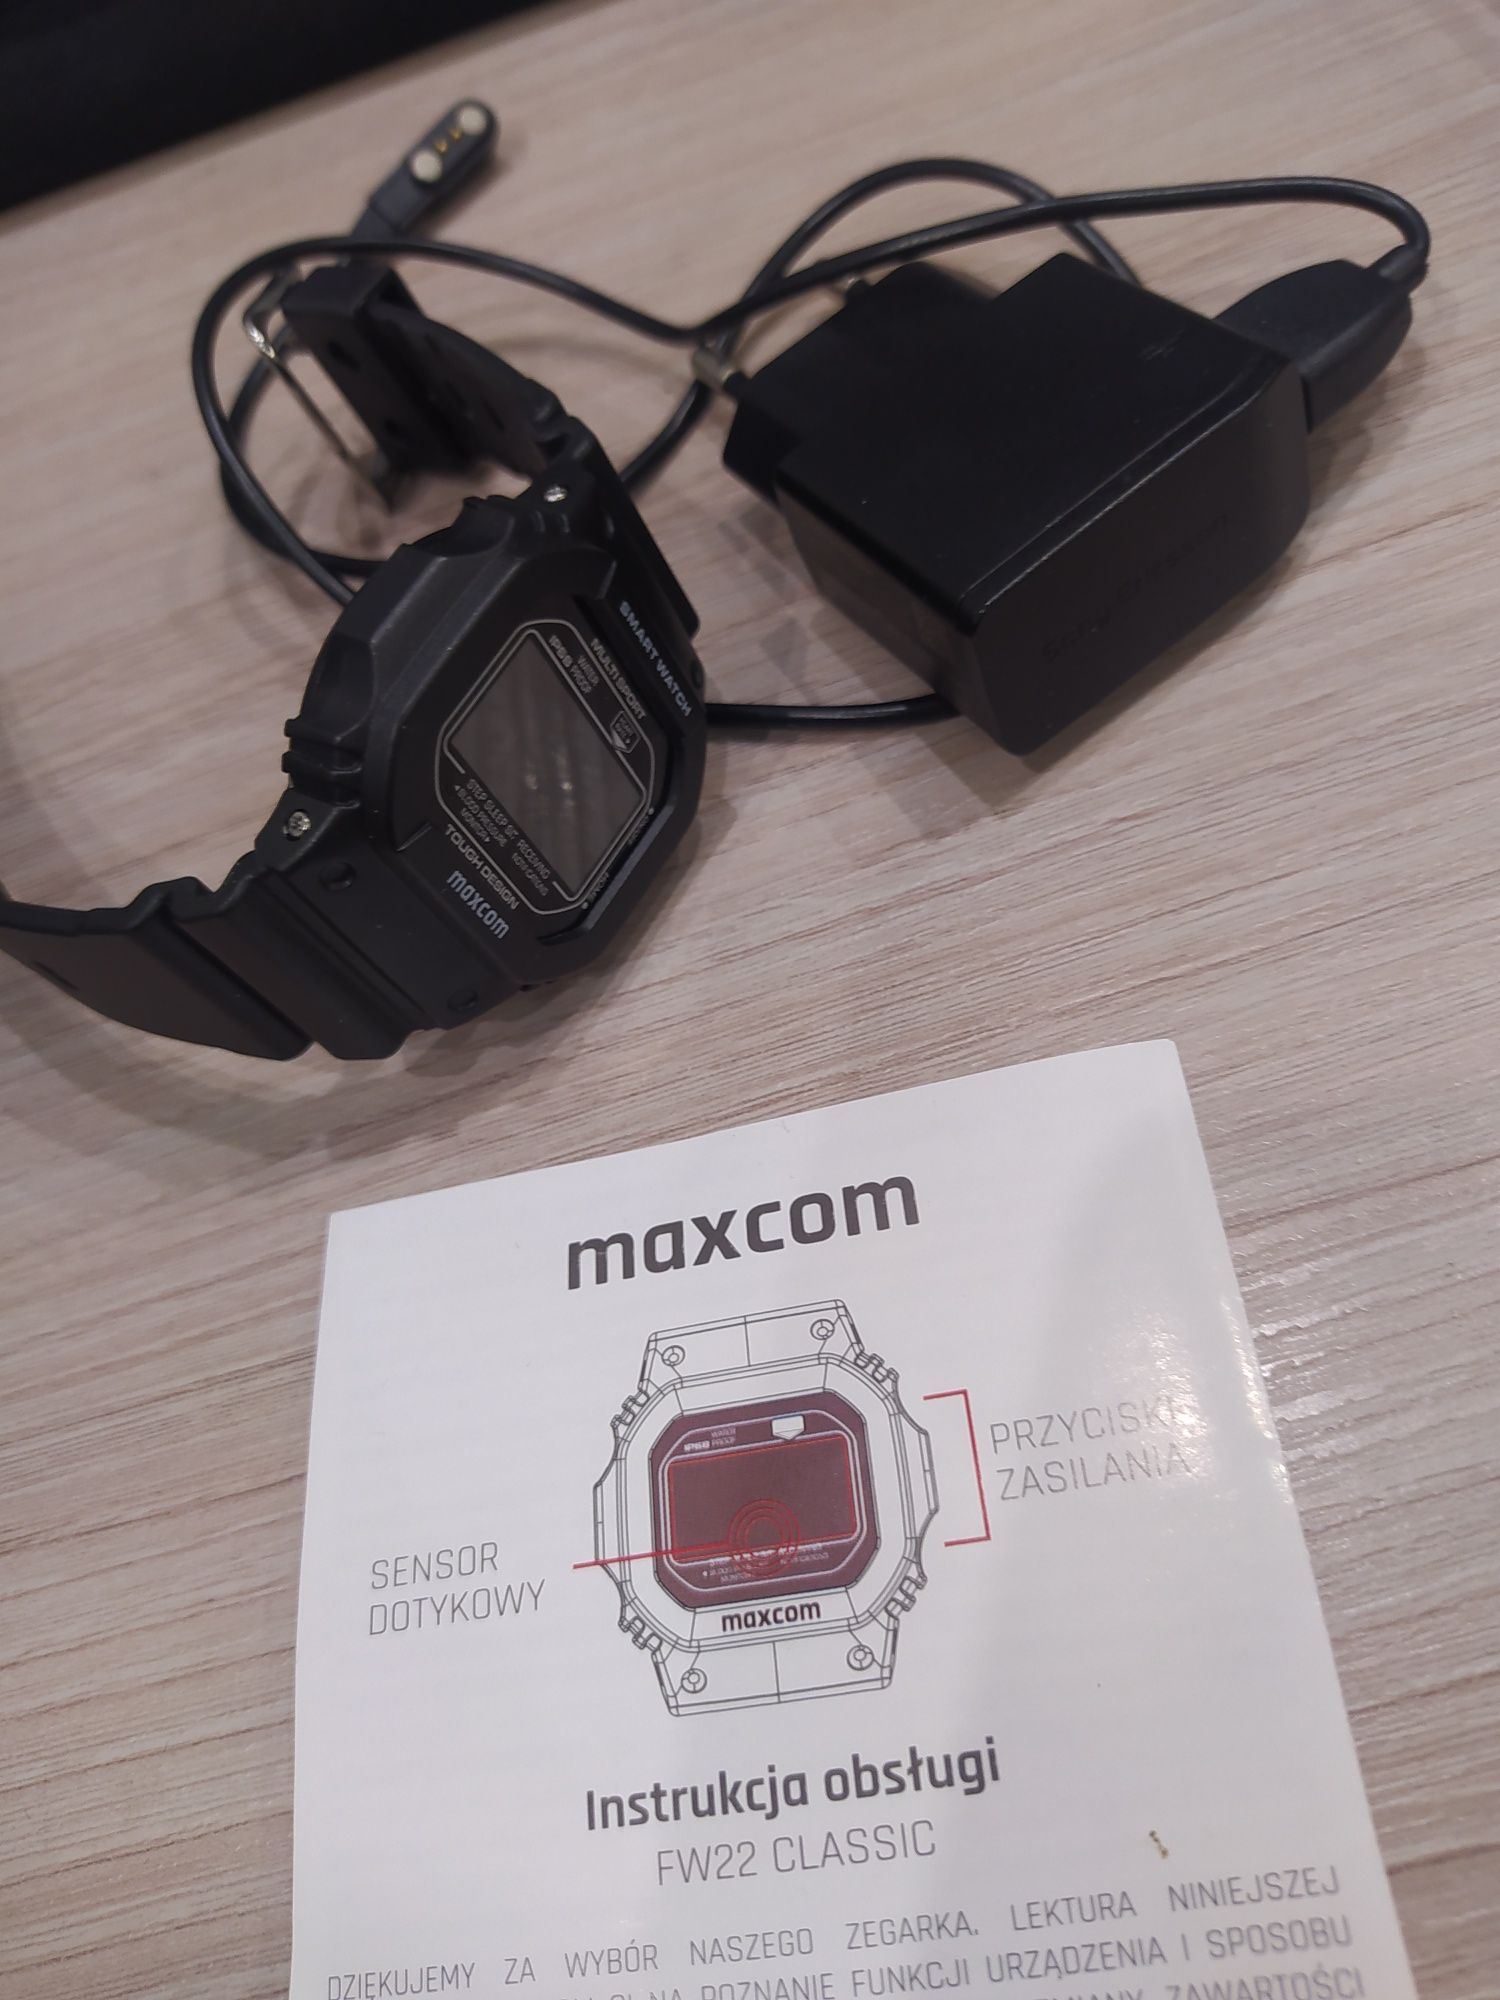 Smart watch smart band maxcom fw22 classic